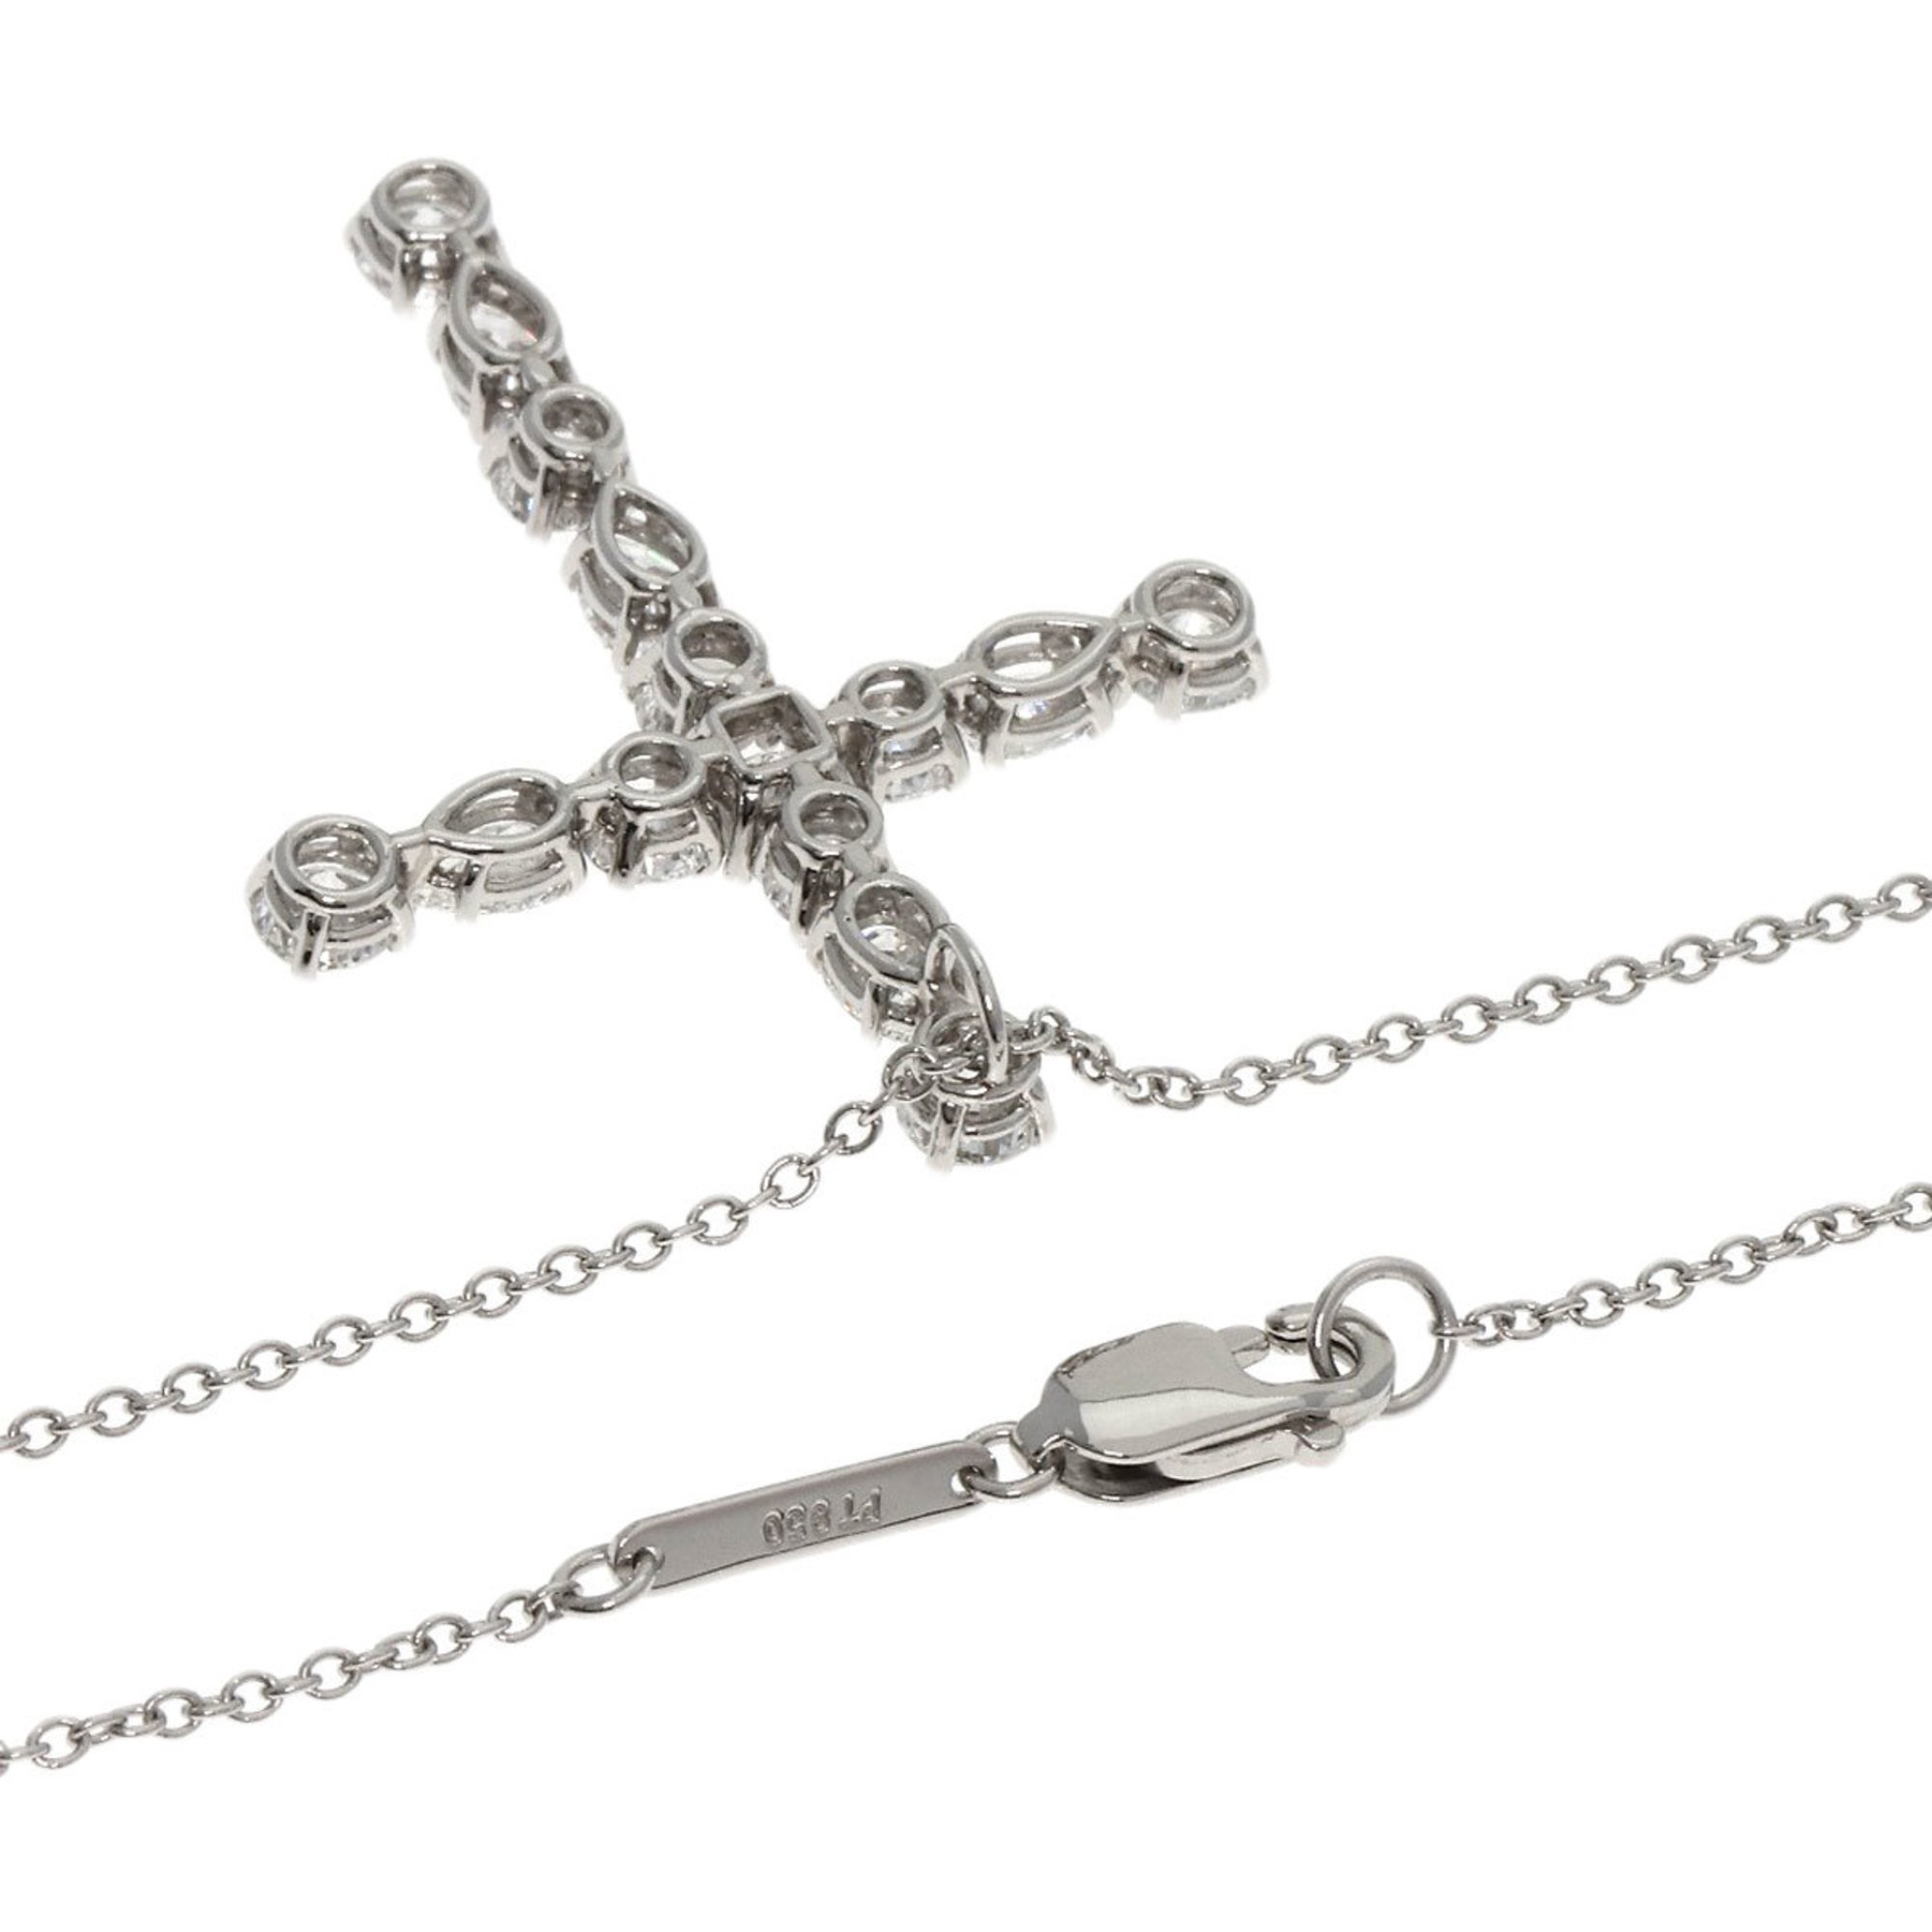 Harry Winston Madonna Cross Pendant Diamond Necklace Platinum PT950 Women's